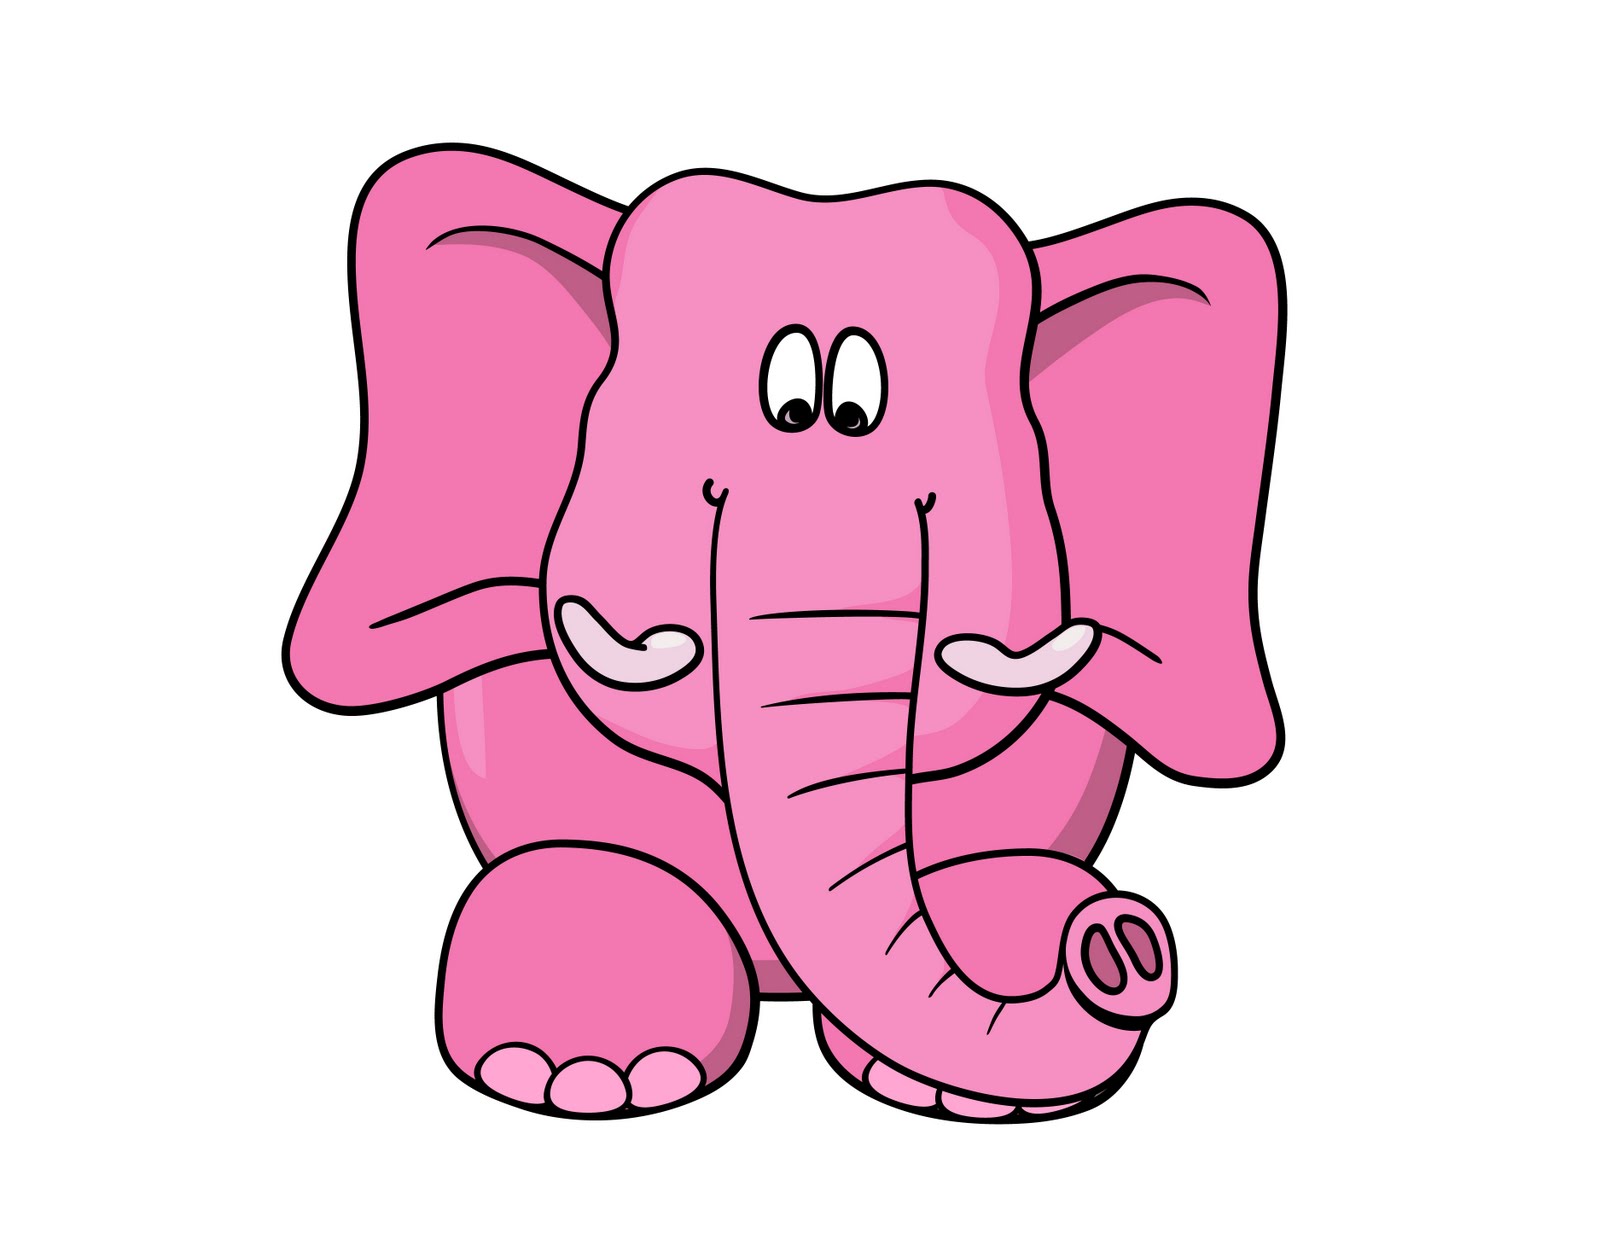 Cartoon Elephant Drawing - ClipArt Best